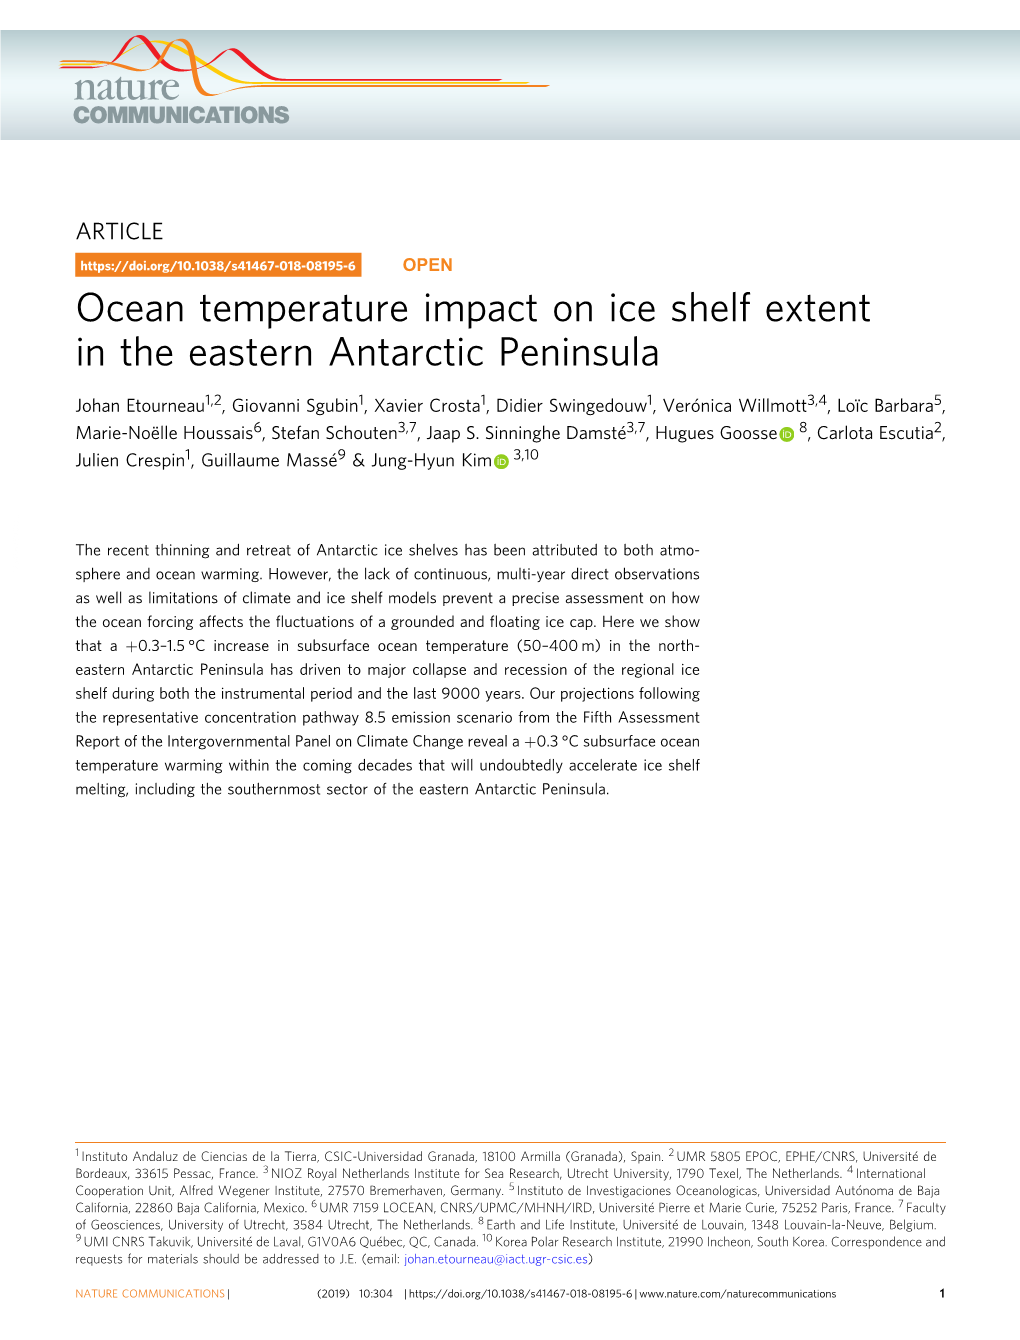 Ocean Temperature Impact on Ice Shelf Extent in the Eastern Antarctic Peninsula